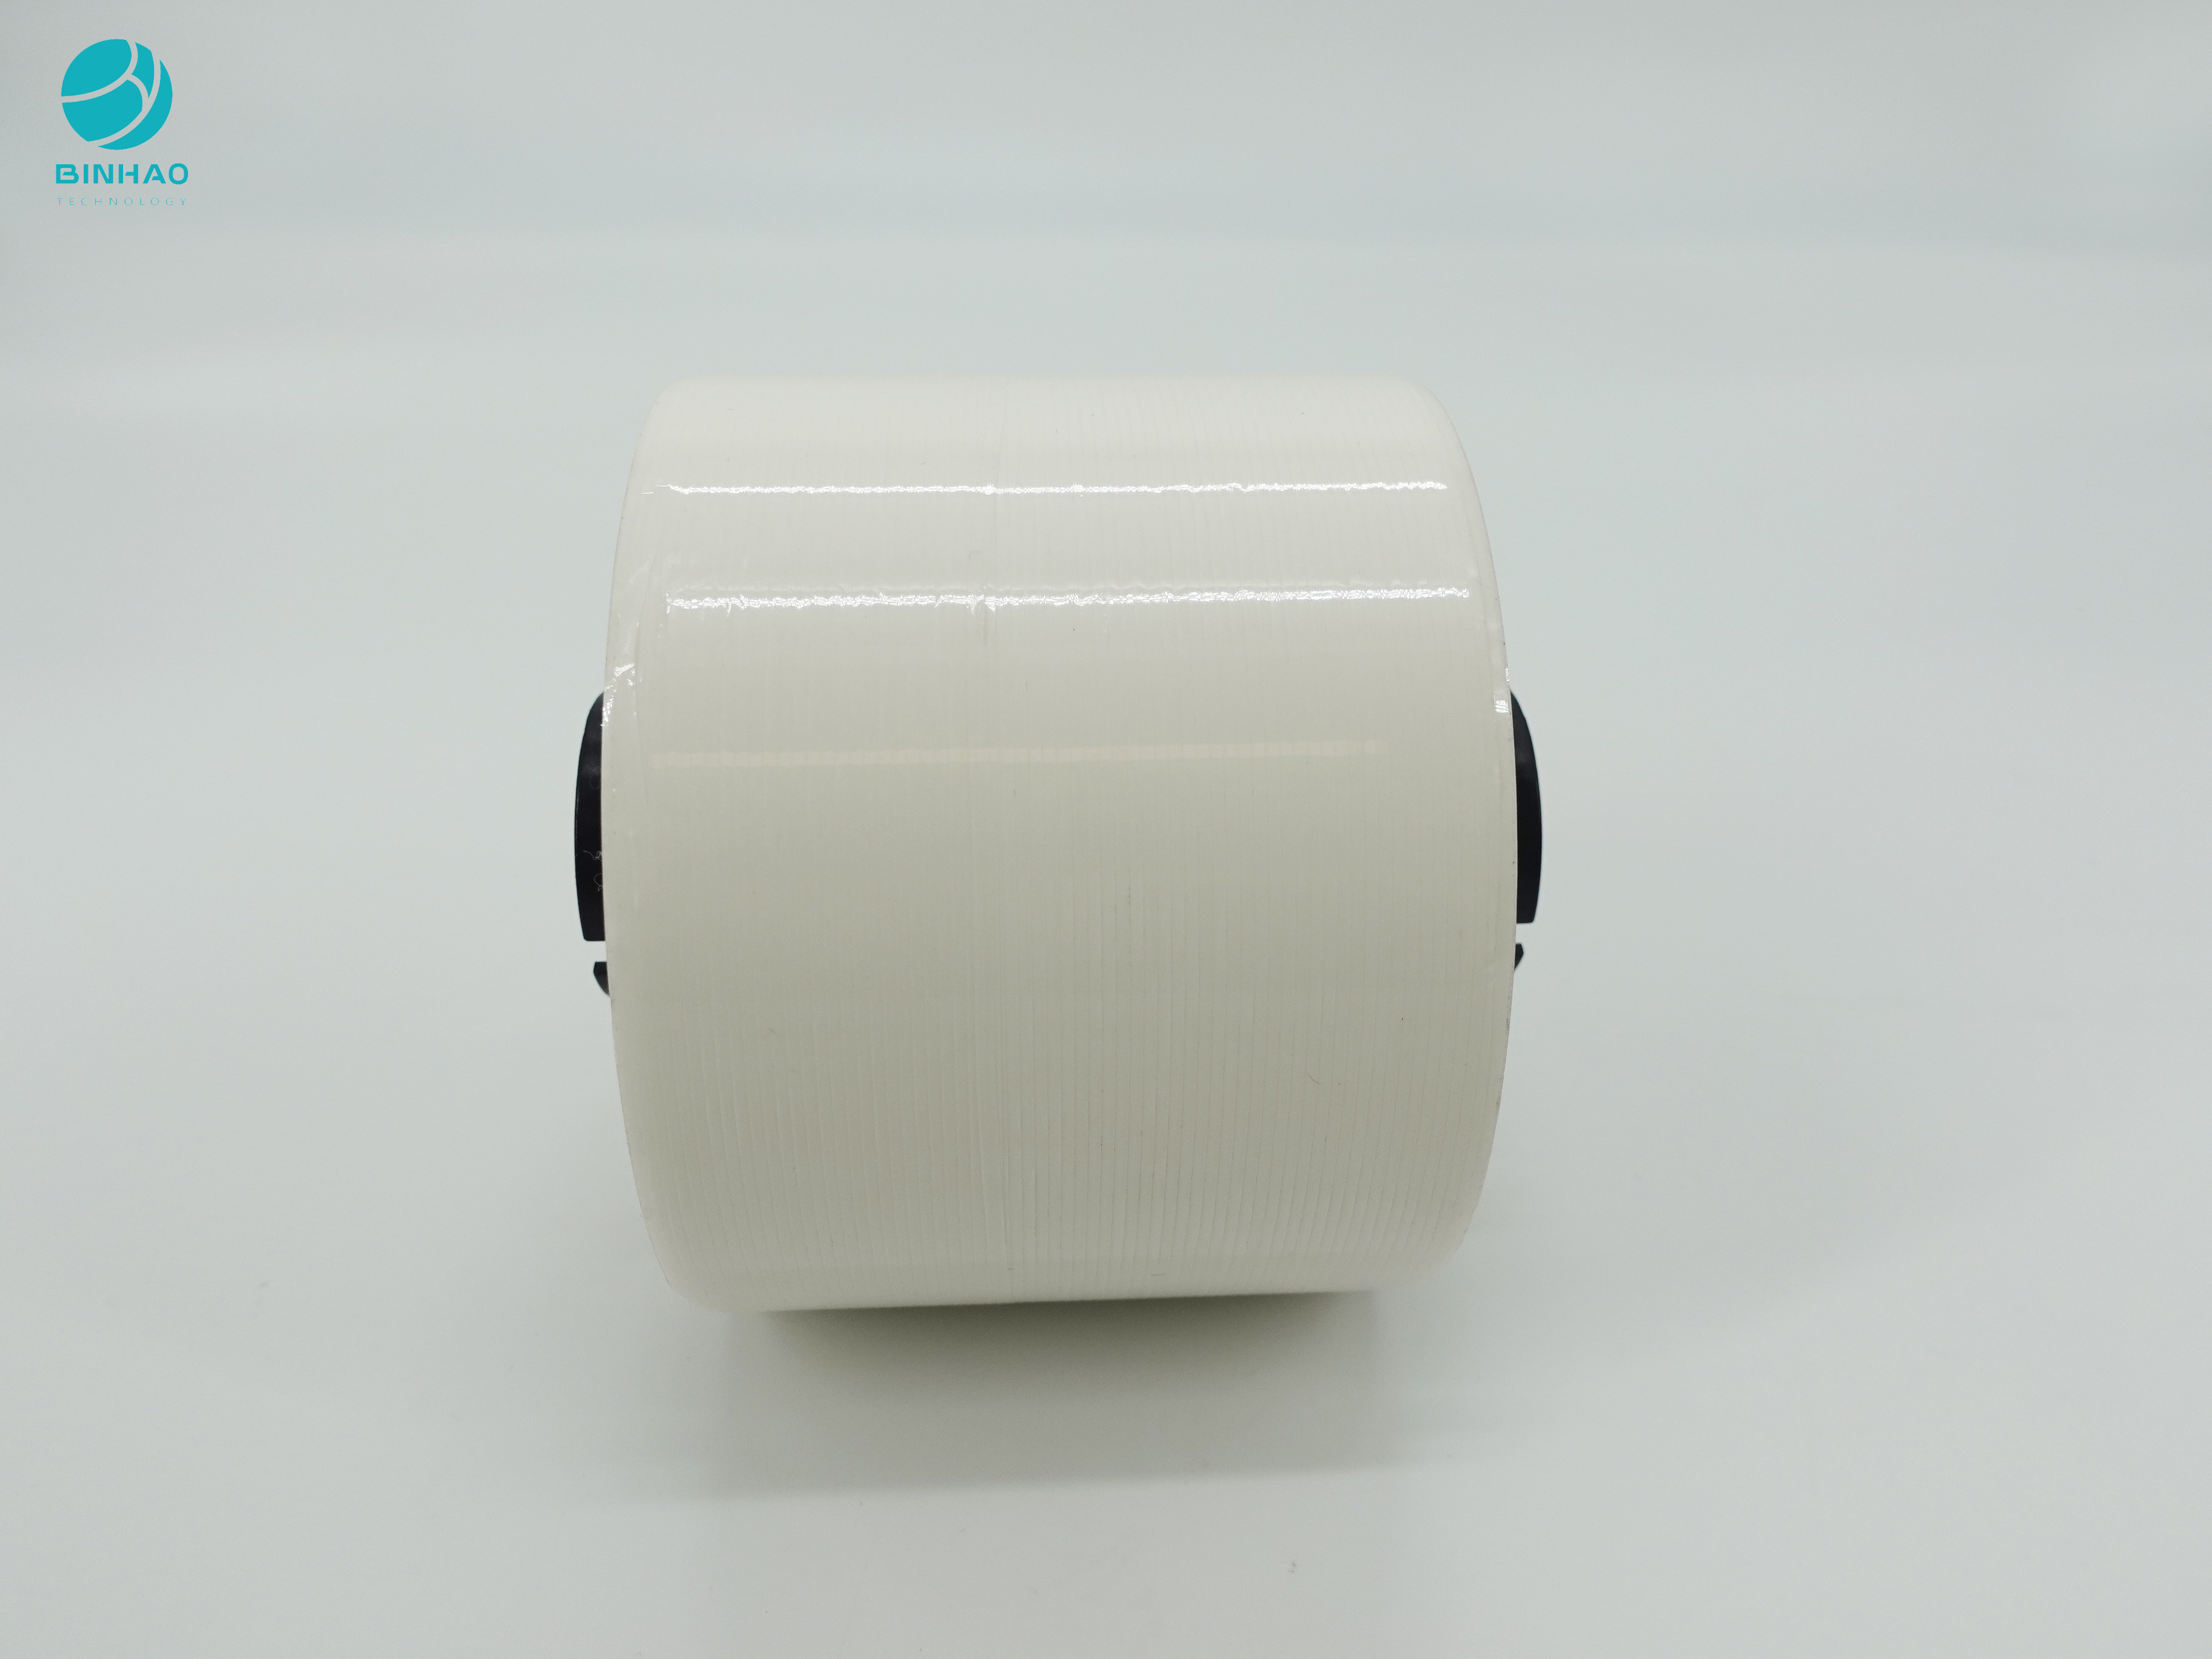 1.6-5mm fertigte weißes Mopp selbstklebendes Riss-Band Rolls Logo For Package besonders an